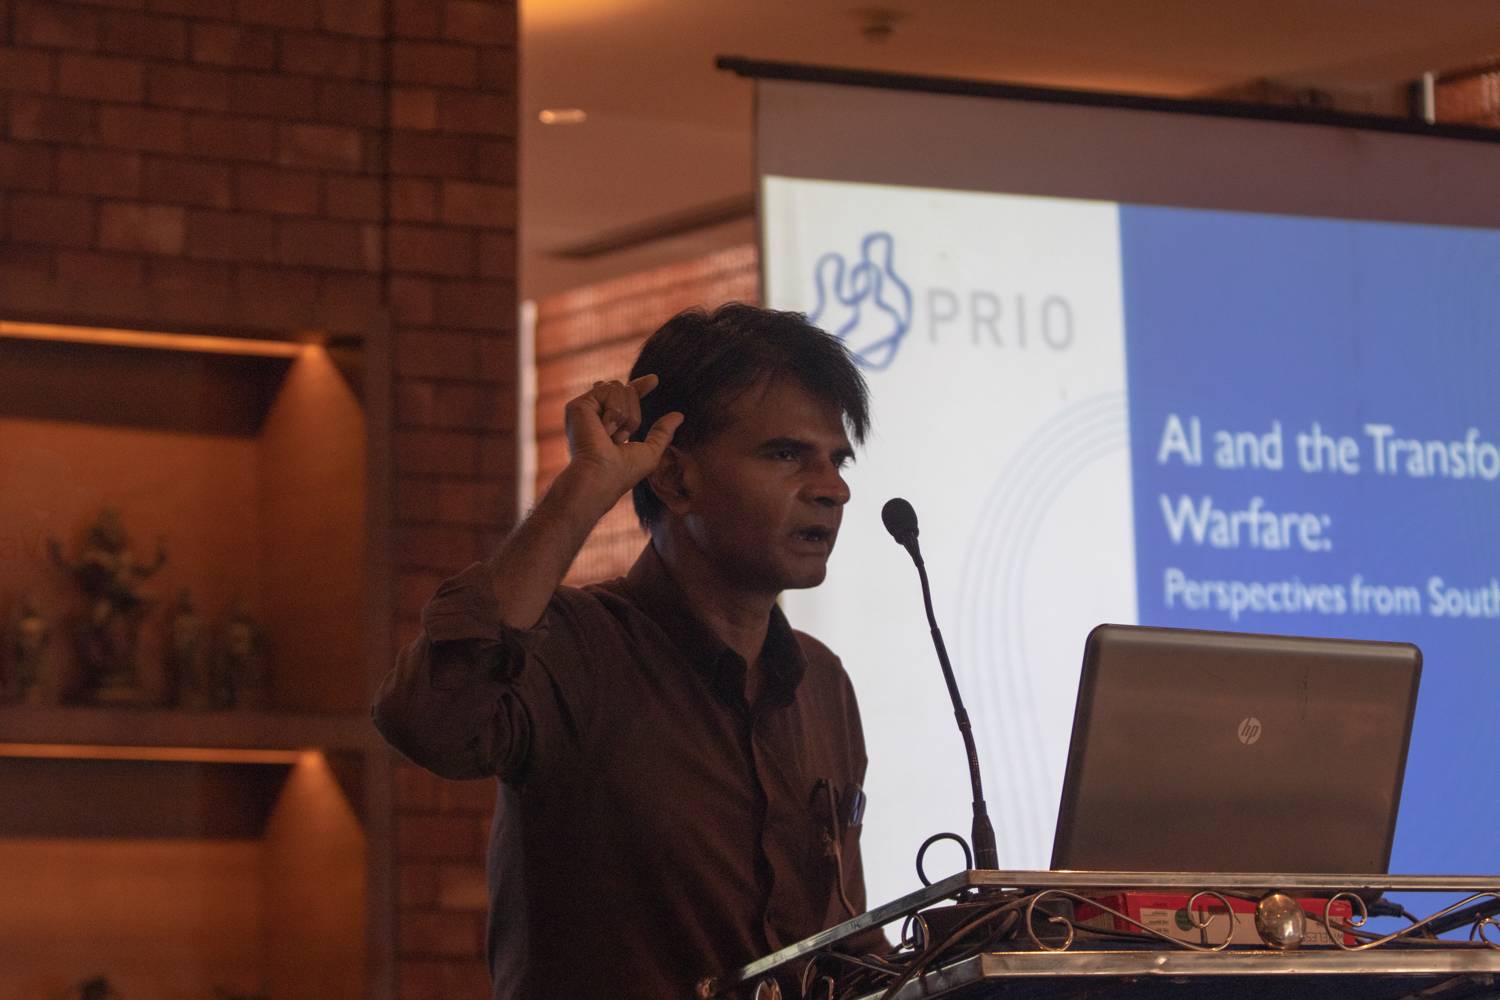 PRIO Global Fellow Kaushik Roy presenting at the conference. Photo: Avishek Bose